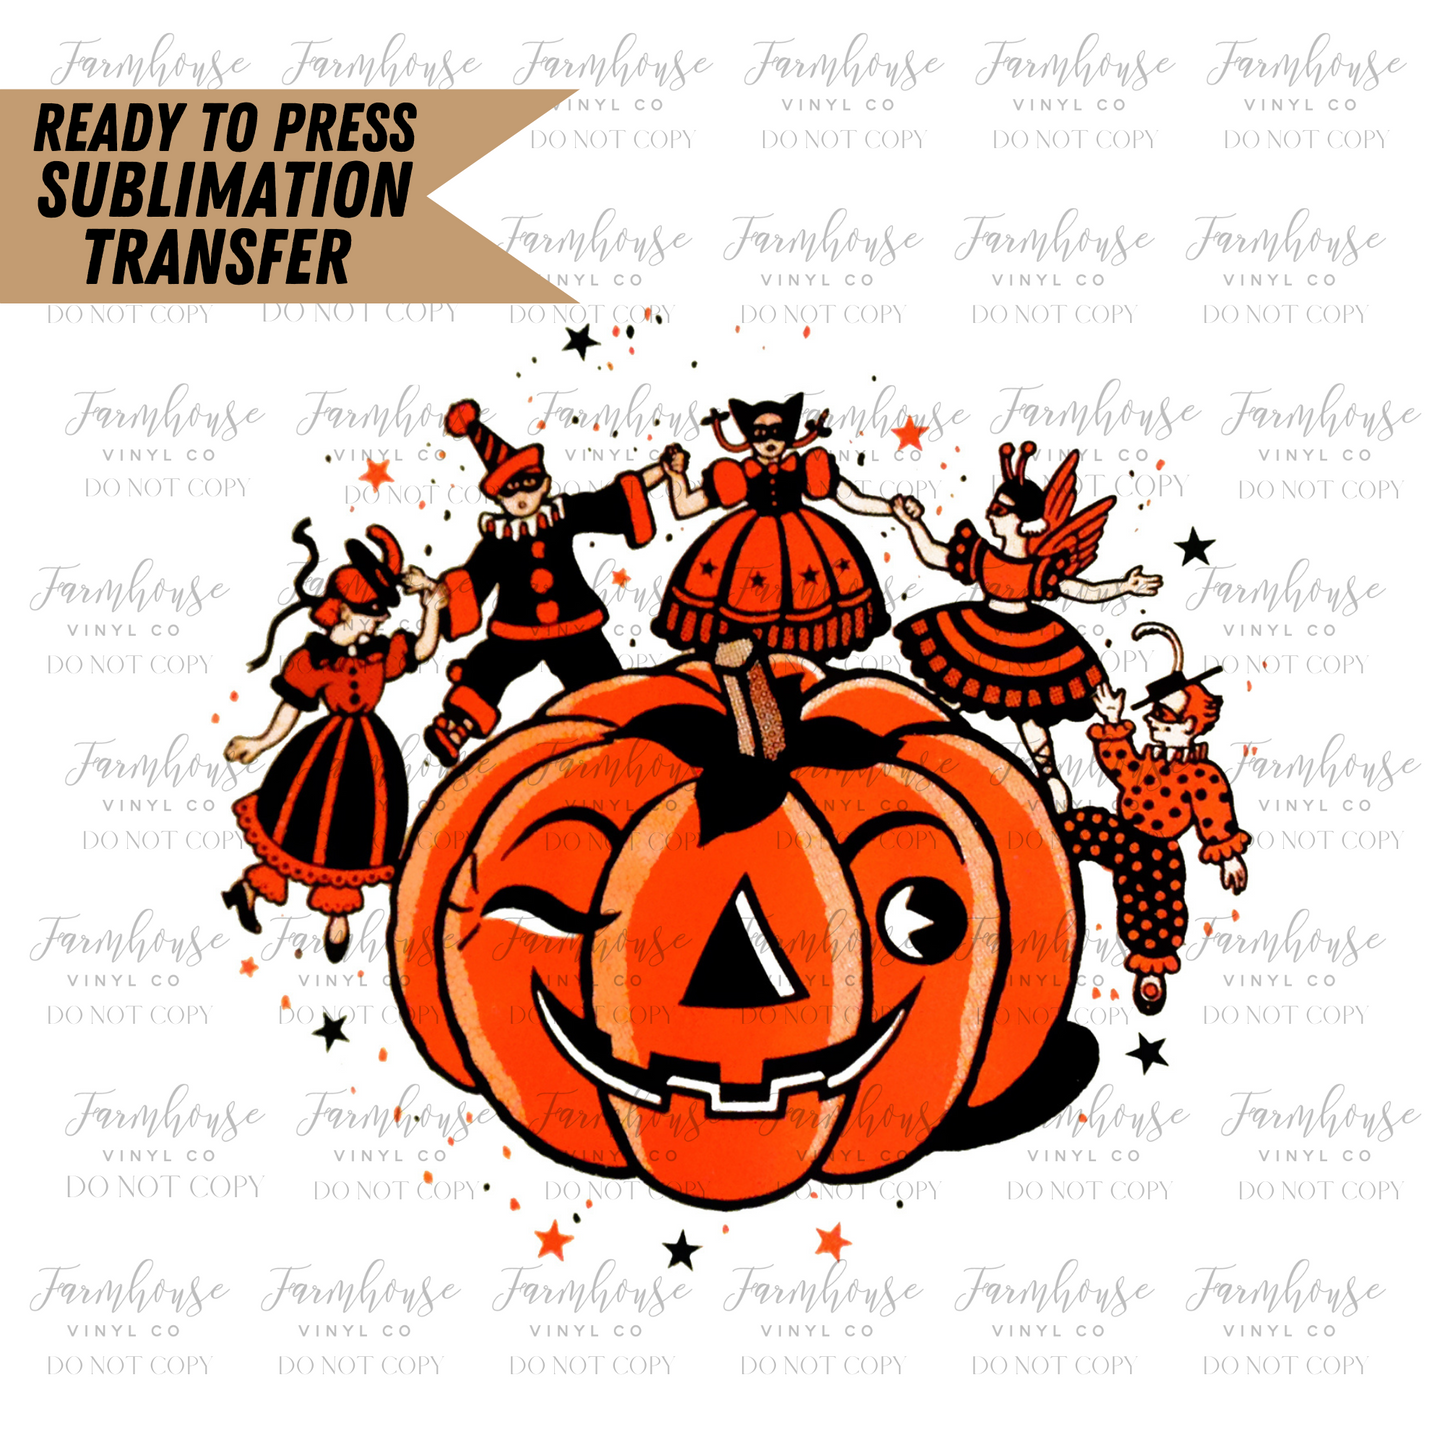 Vintage Jack O Lantern Pumpkin Ready To Press Sublimation Transfer